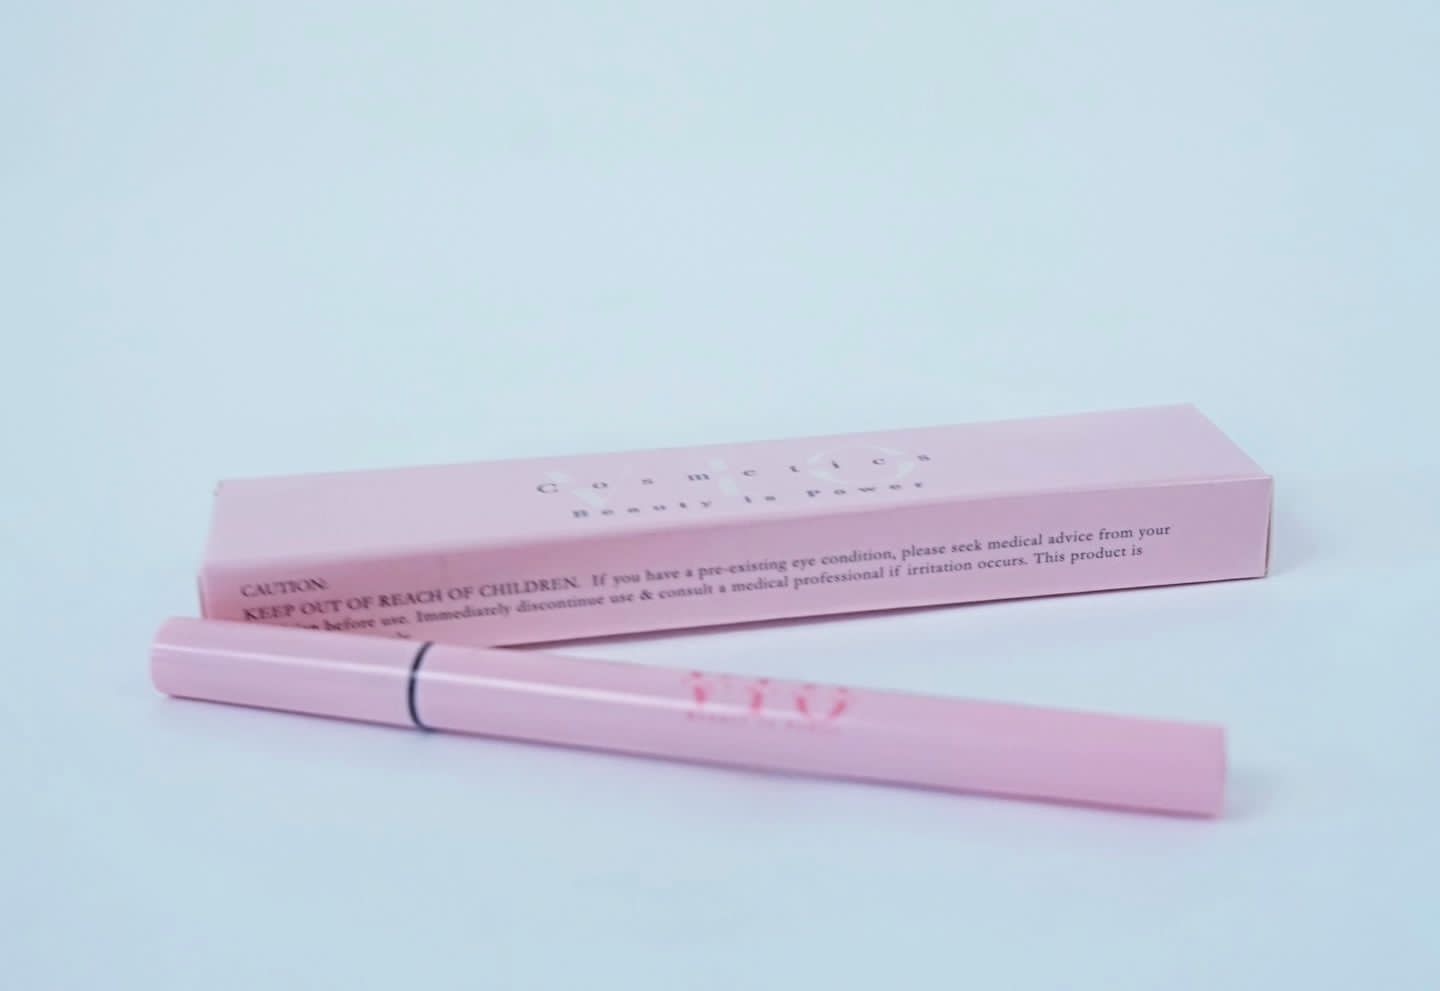 Pink Adhesive liner glue